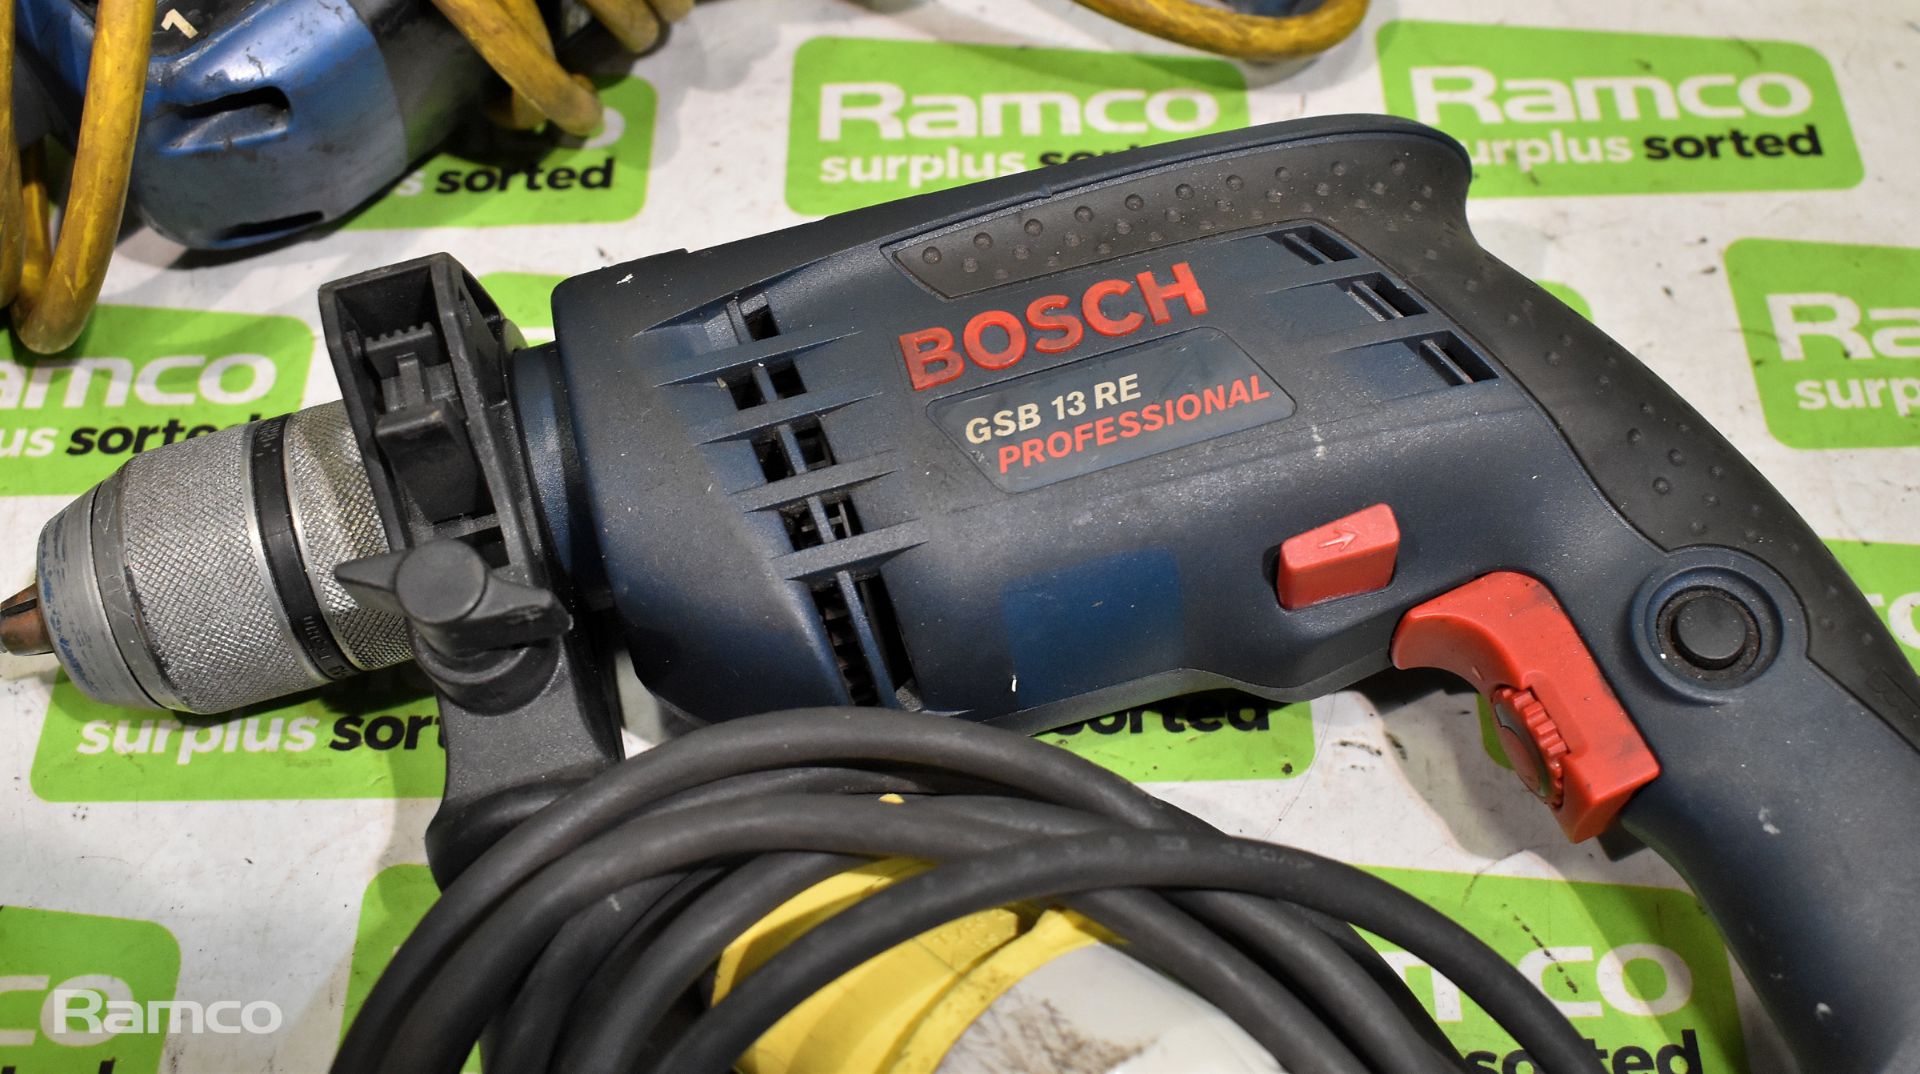 Bosch 1180.7 600W 110V drill, Bosch Professional GSB 13 RE110V drill - Image 3 of 3